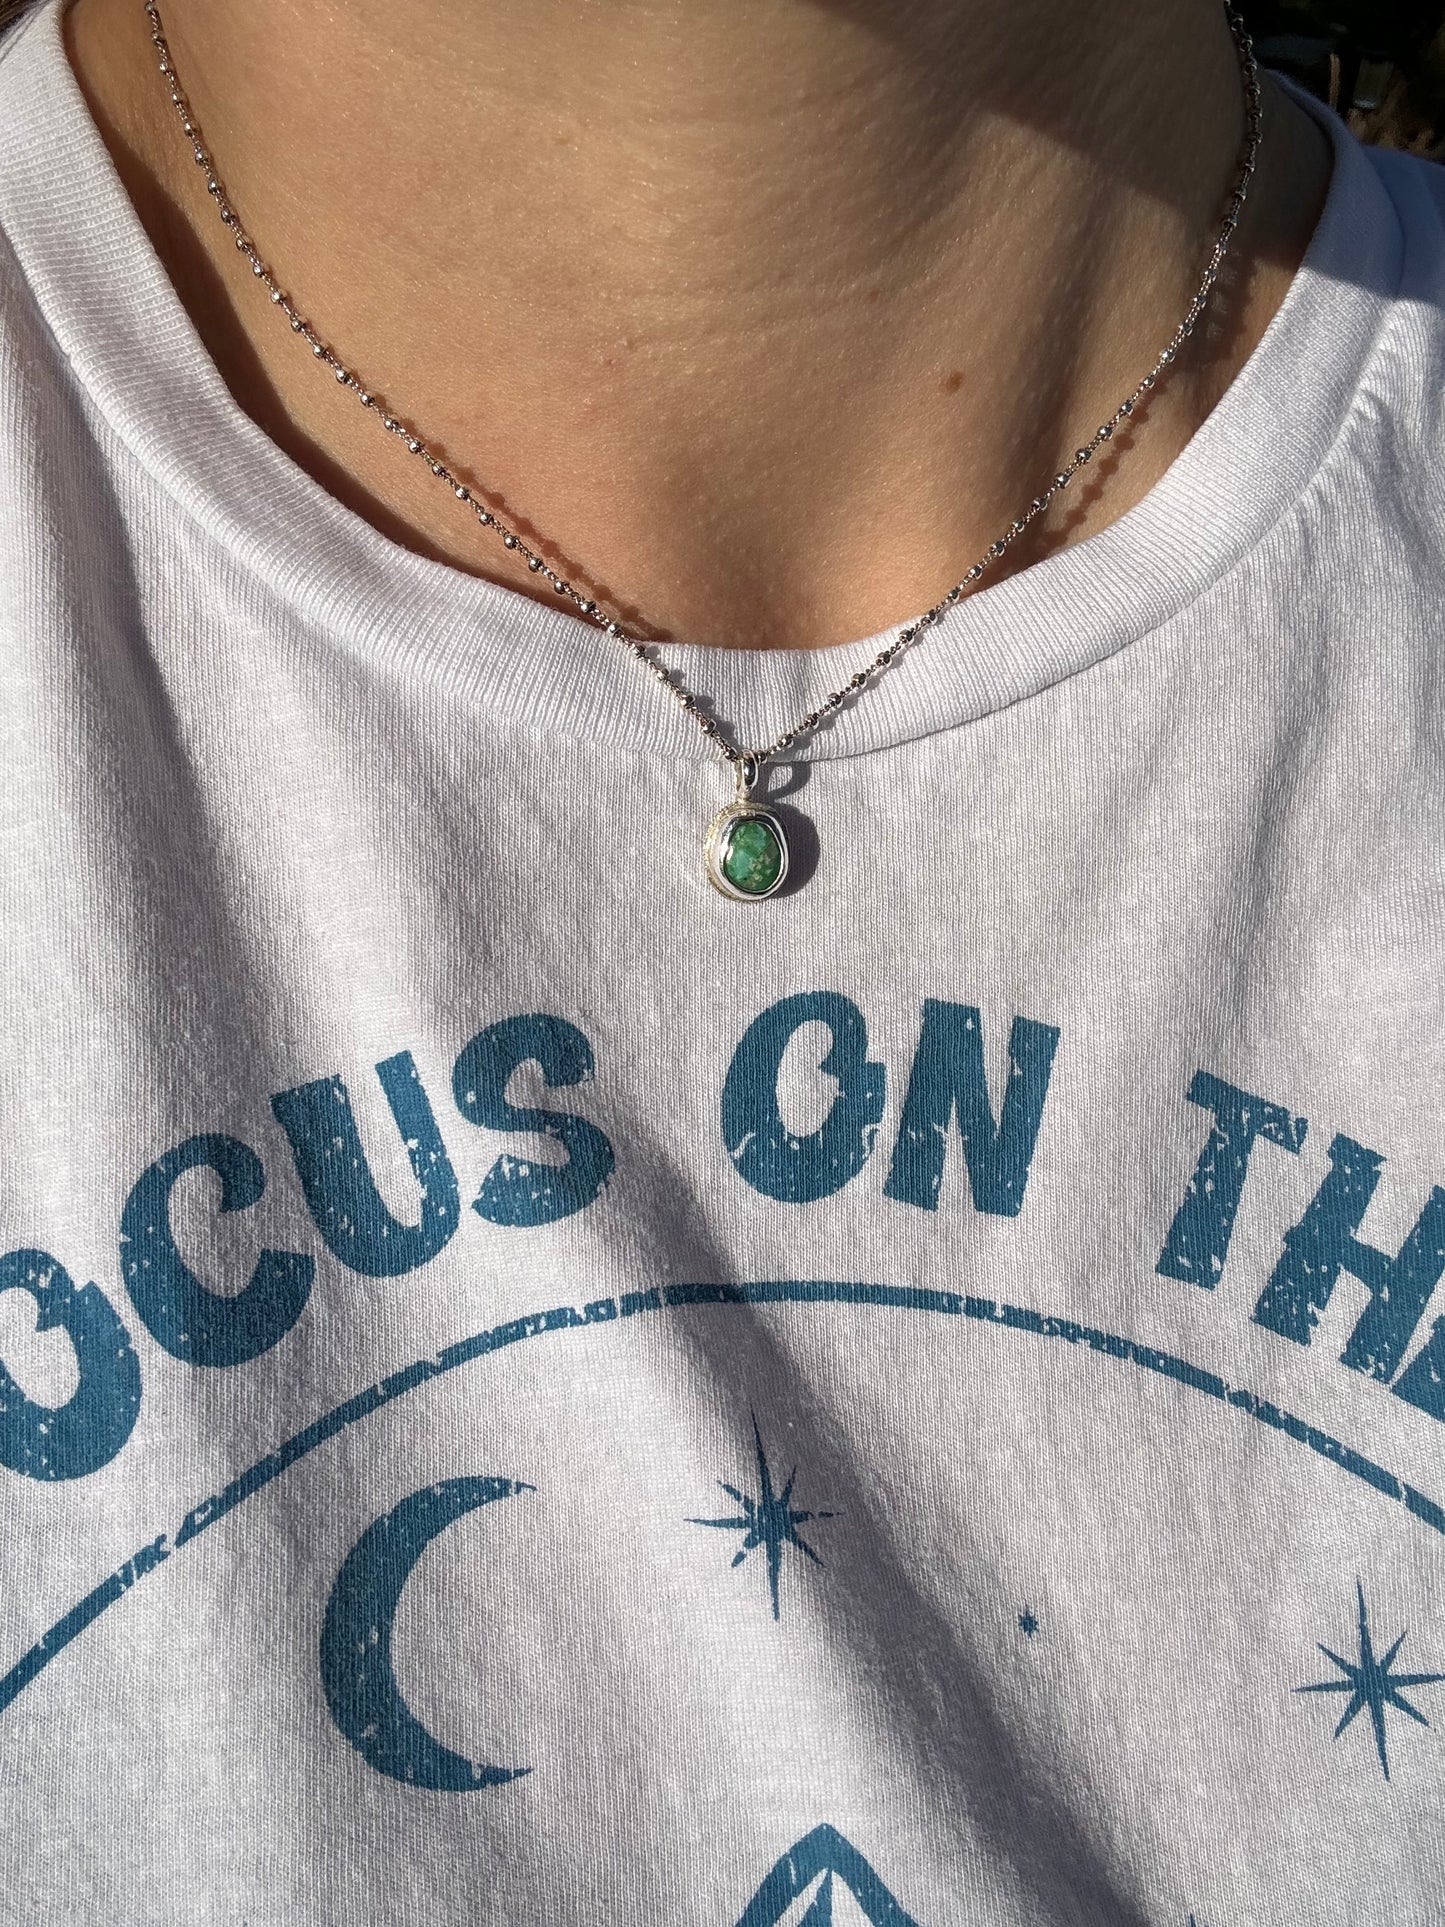 Mini turquoise necklace